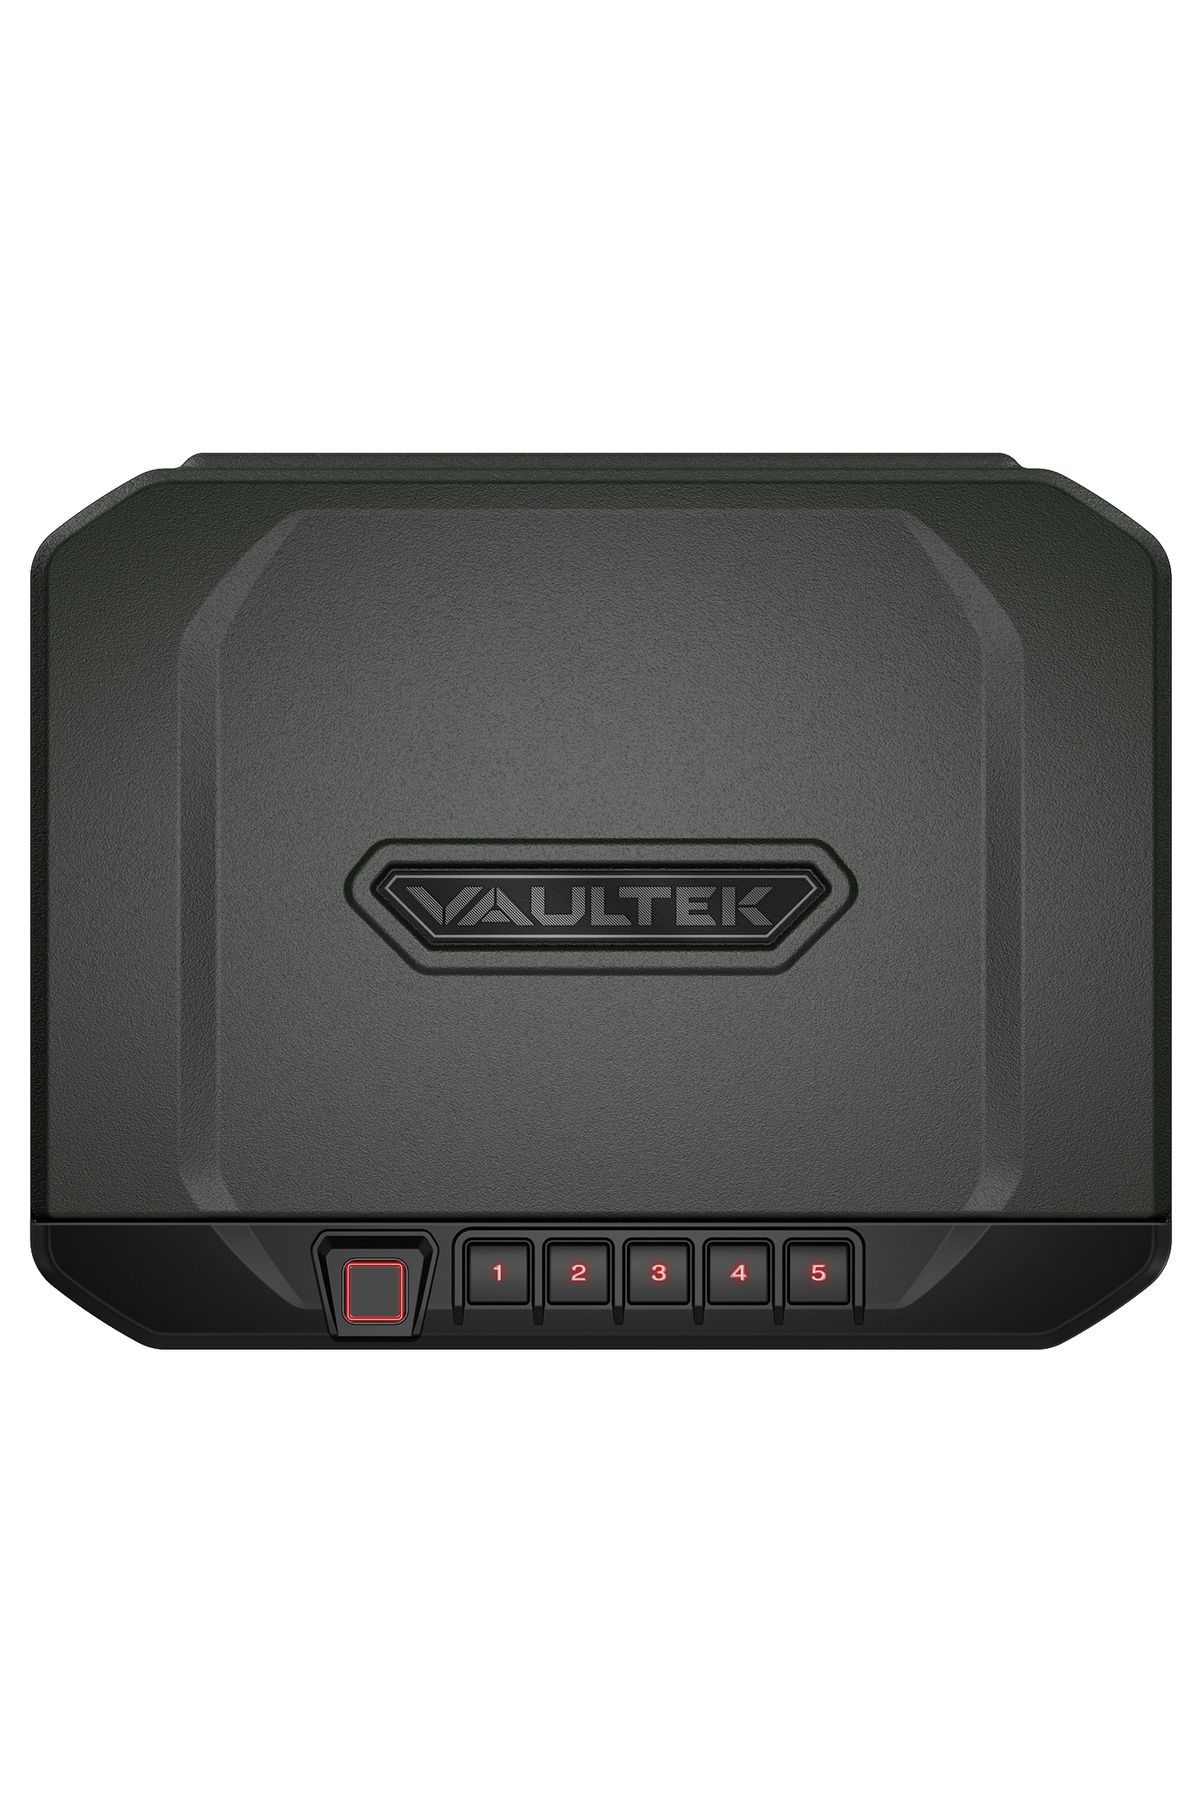 Vaultek VS20i Biometric Çelik Kasa